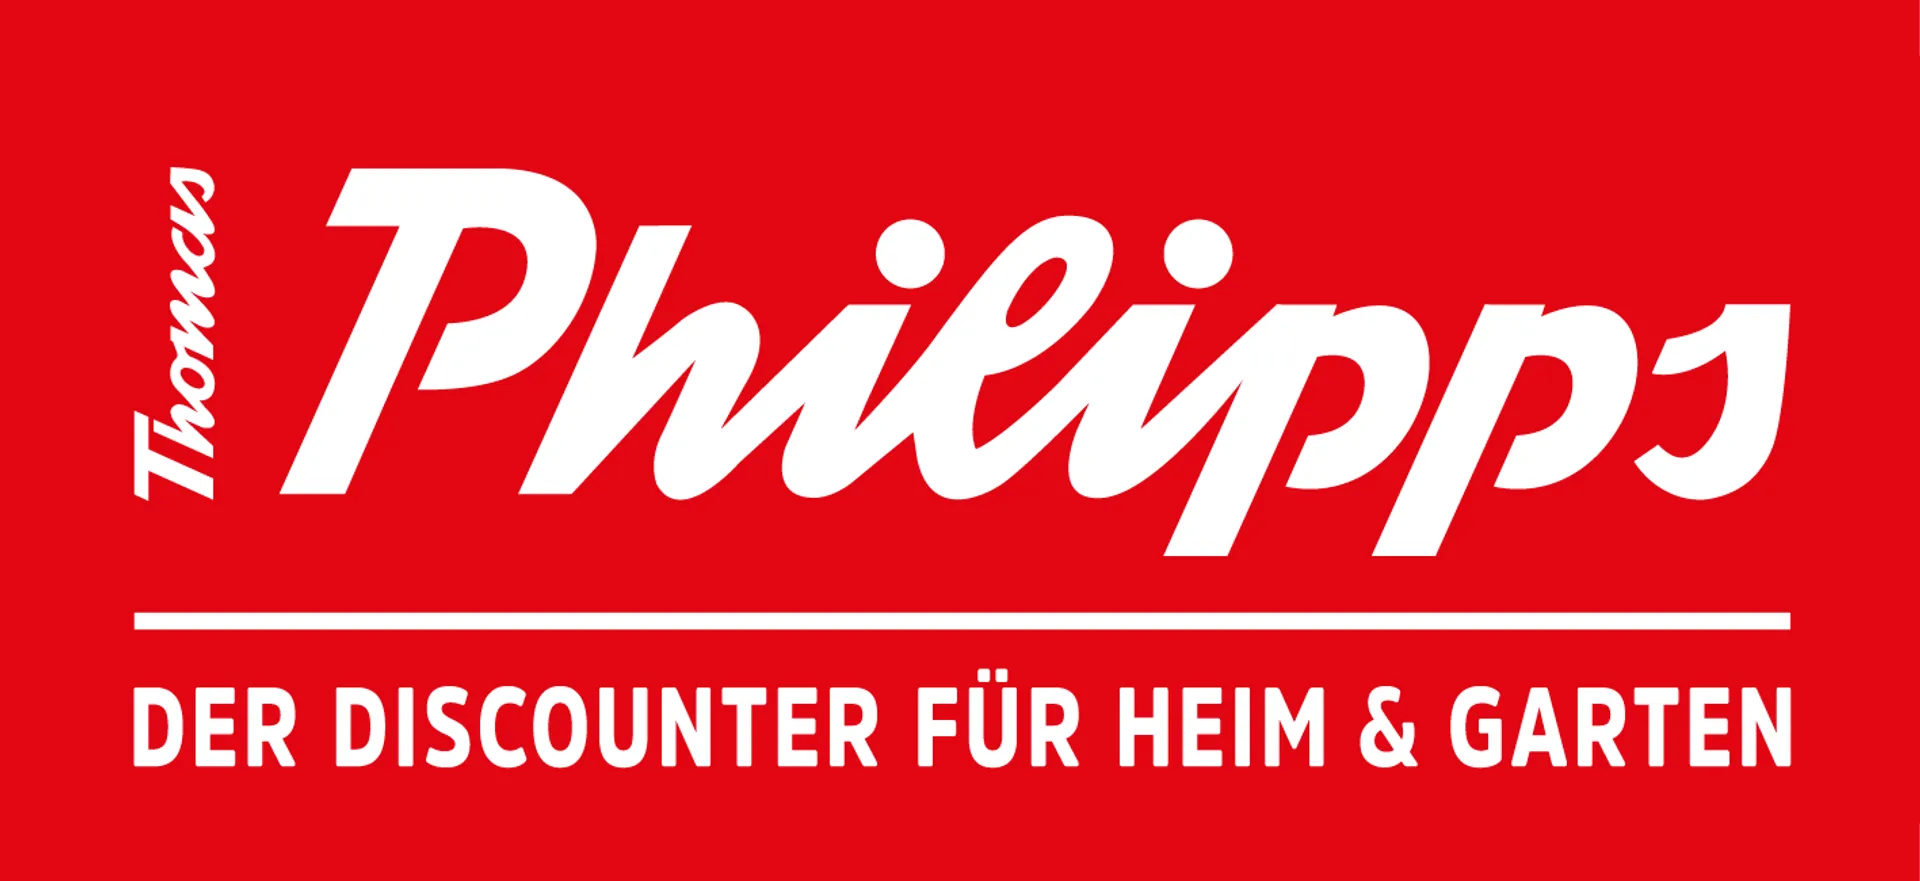 THOMAS PHILIPPS logo